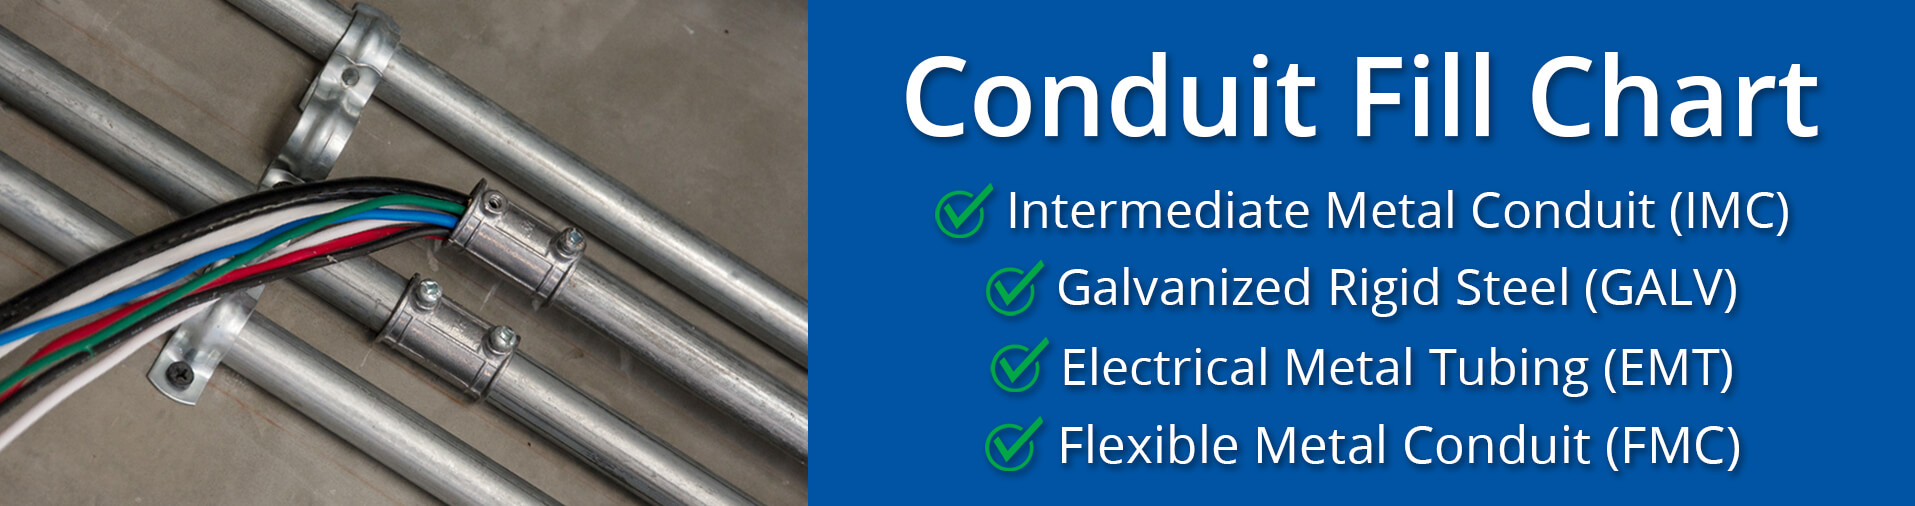 conduit fill chart for intermediate metal conduit imc, galvanized rigid steel rmc, electrical metal tubing emt, and flexible metal conduit